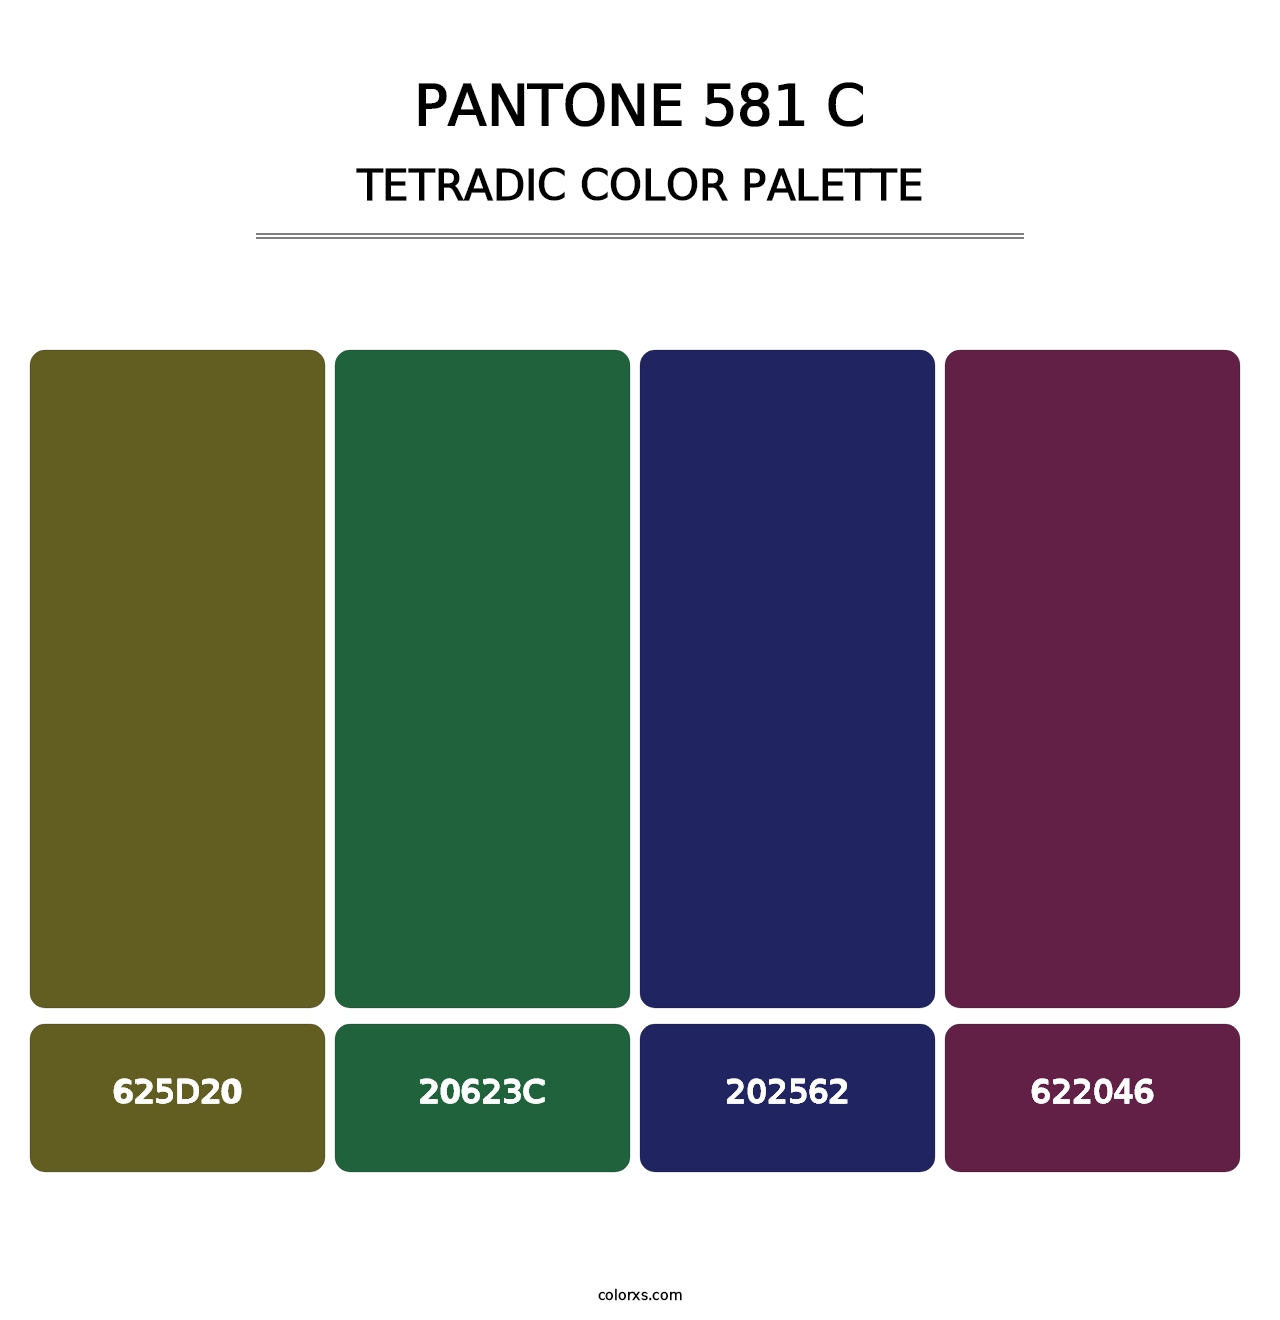 PANTONE 581 C - Tetradic Color Palette